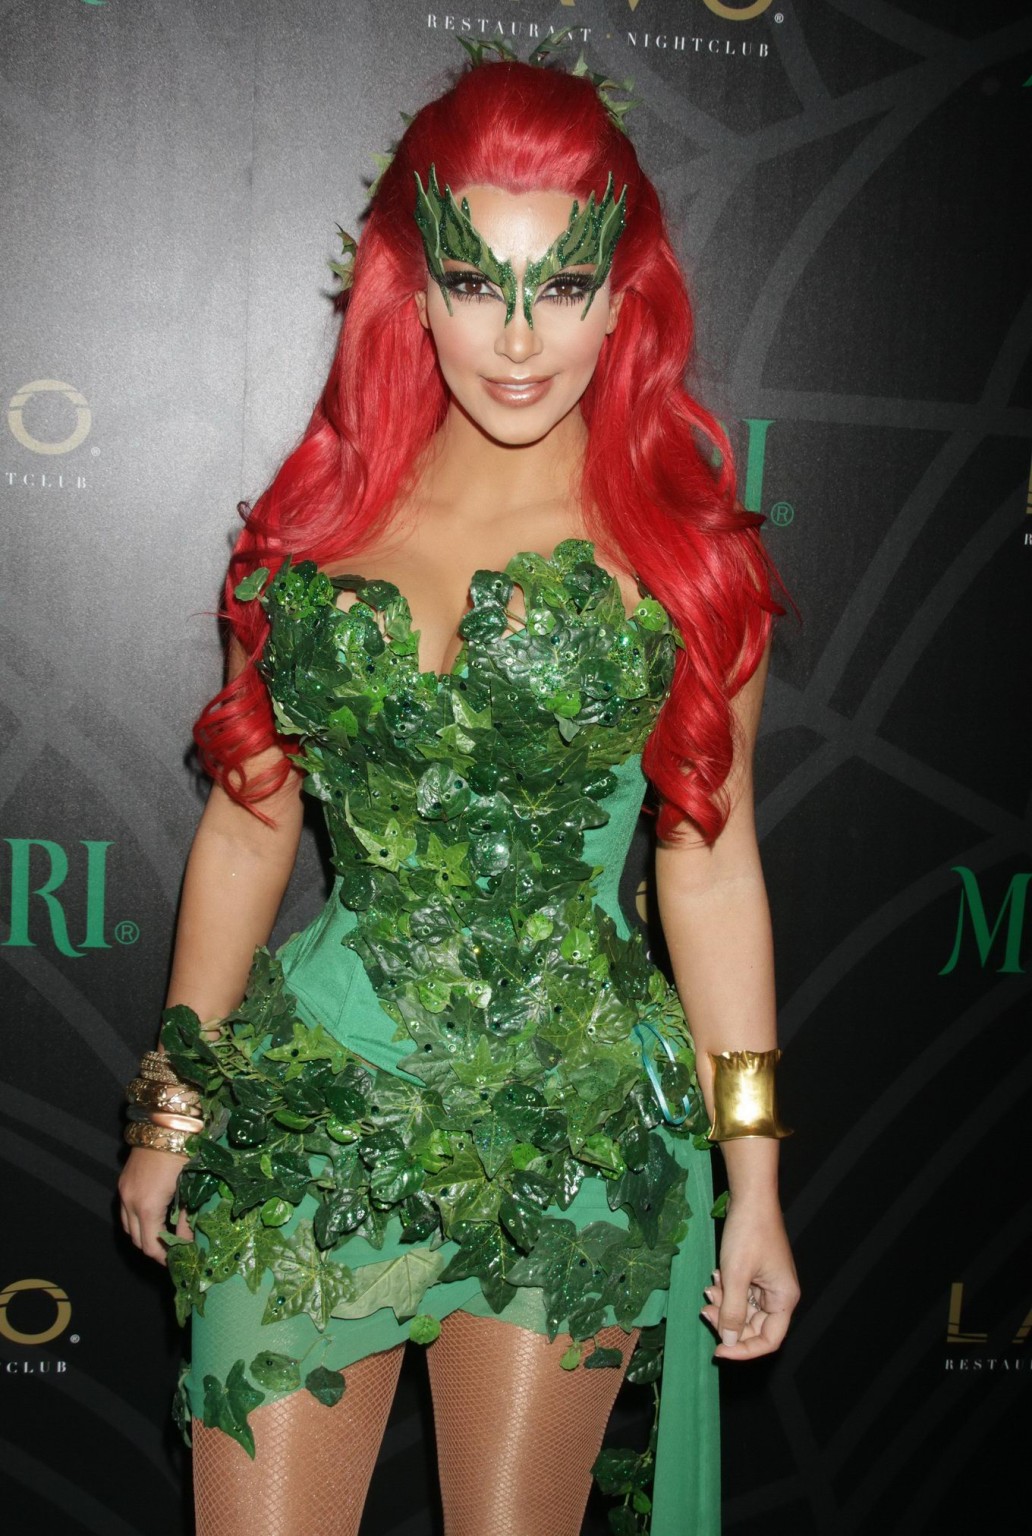 Kim kardashian vollbusig bei grüner midory halloween party in las vegas
 #75283771